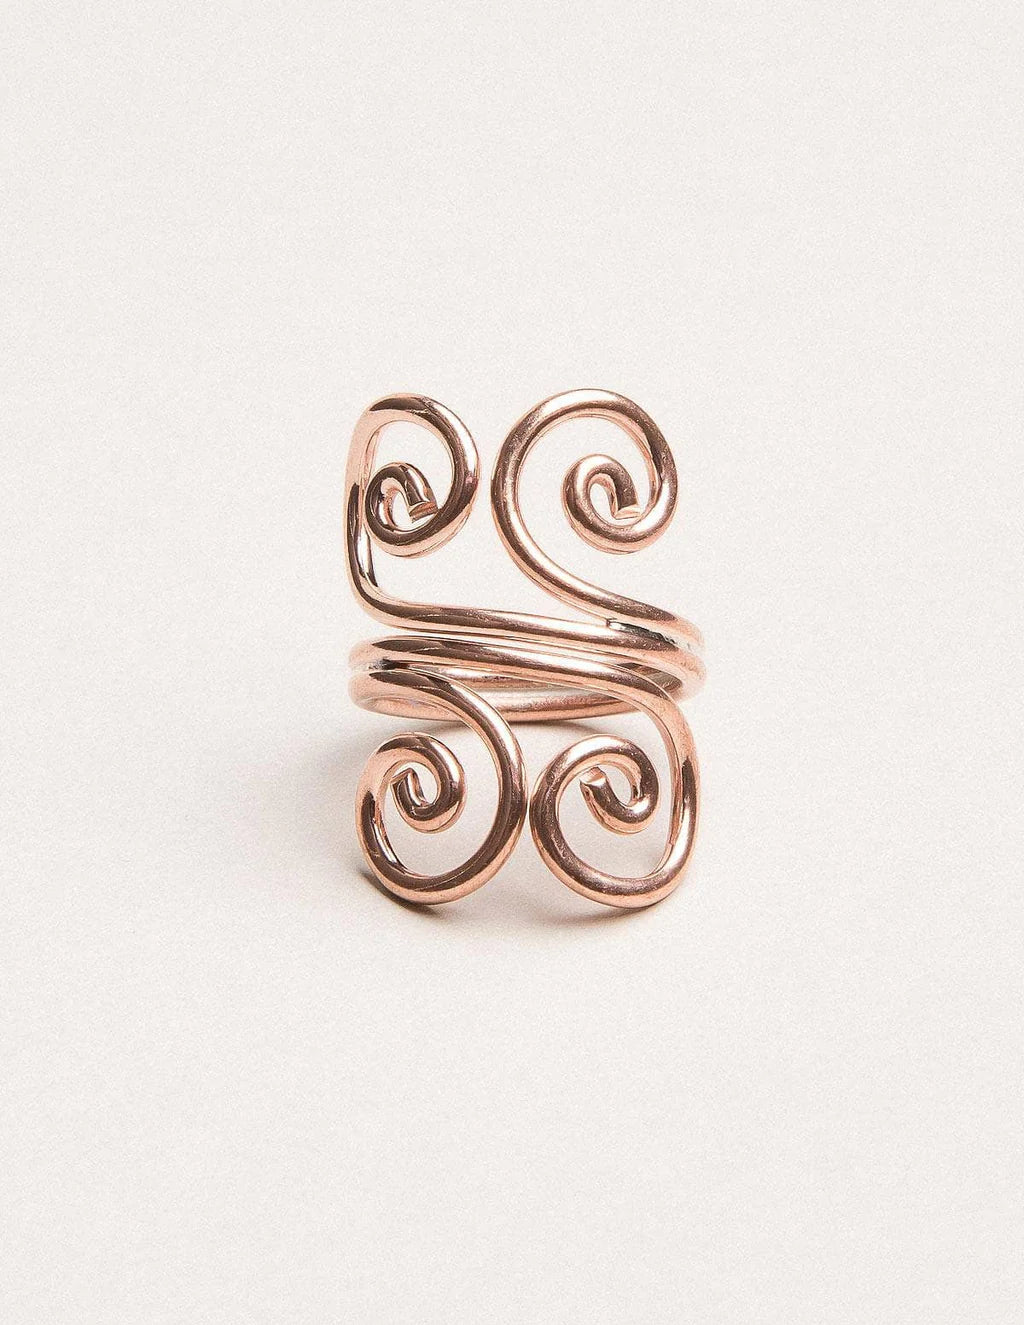 Copper Ring: તાંબાની વીંટી પહેરવાથી થાય છે આ ચમત્કારિક ફાયદા, ચમકી જશે  તમારી કિસ્મત!